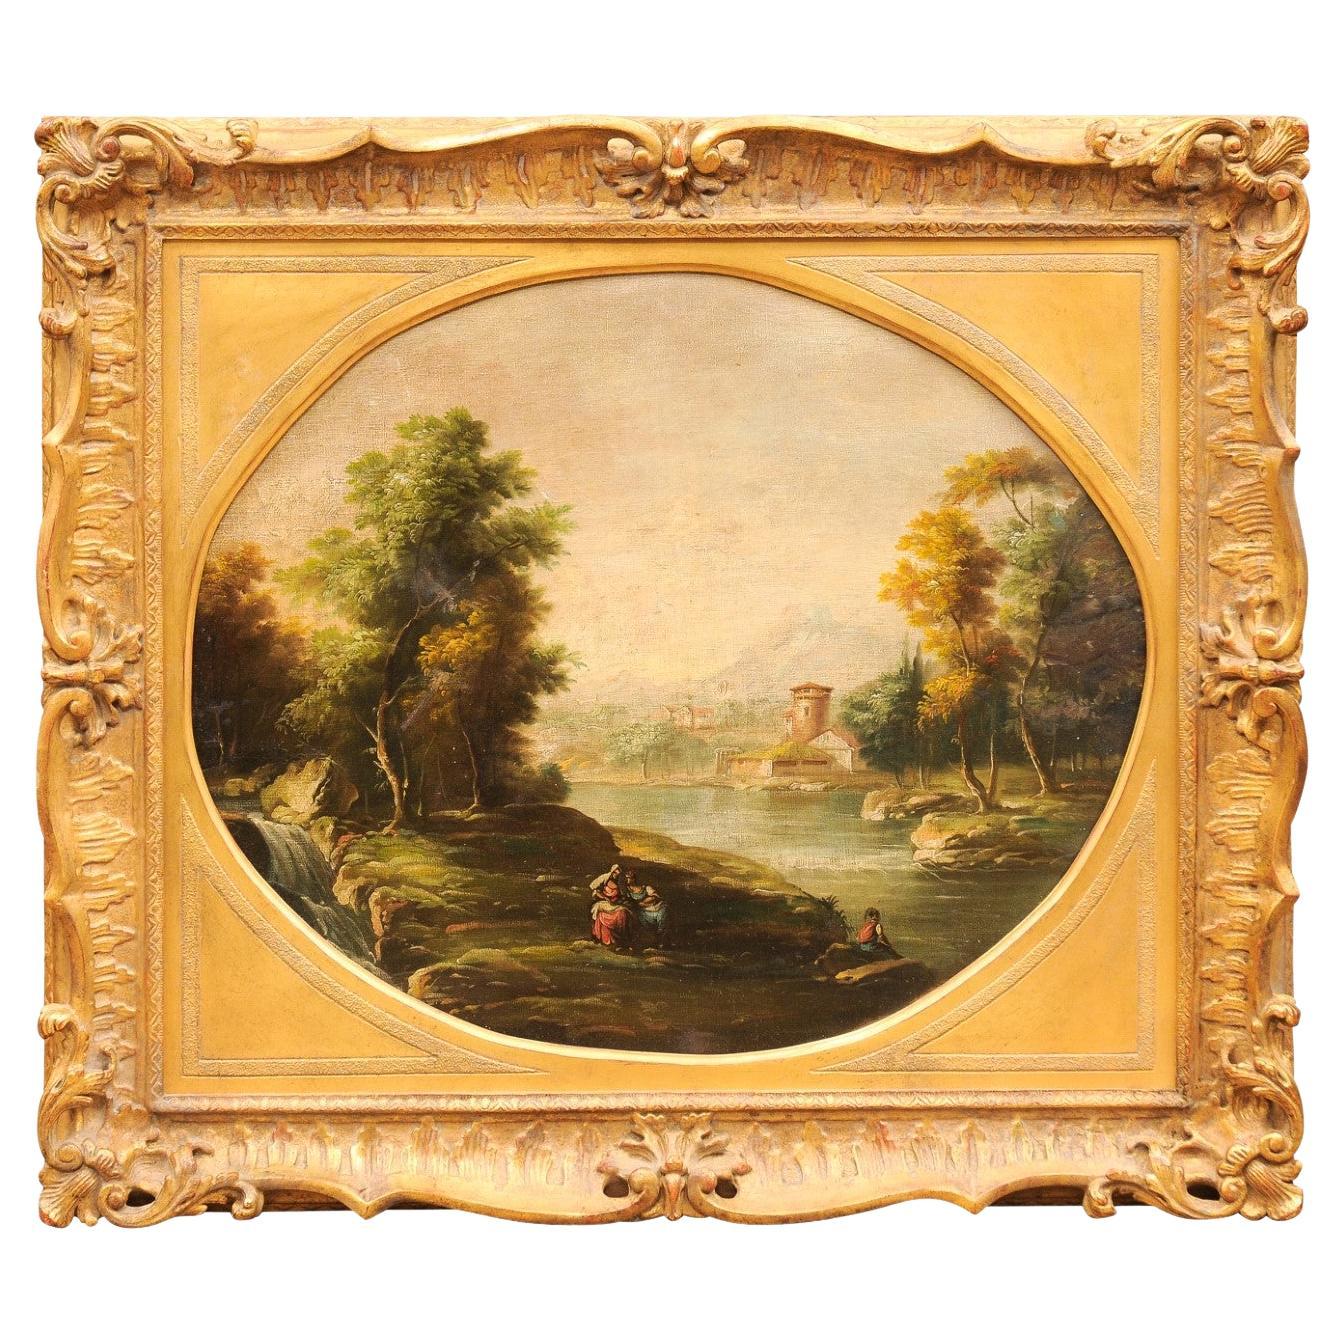 Großes englisches Ölgemälde auf Leinwand, Landschaftsgemälde in vergoldetem Rahmen, 19. Jahrhundert